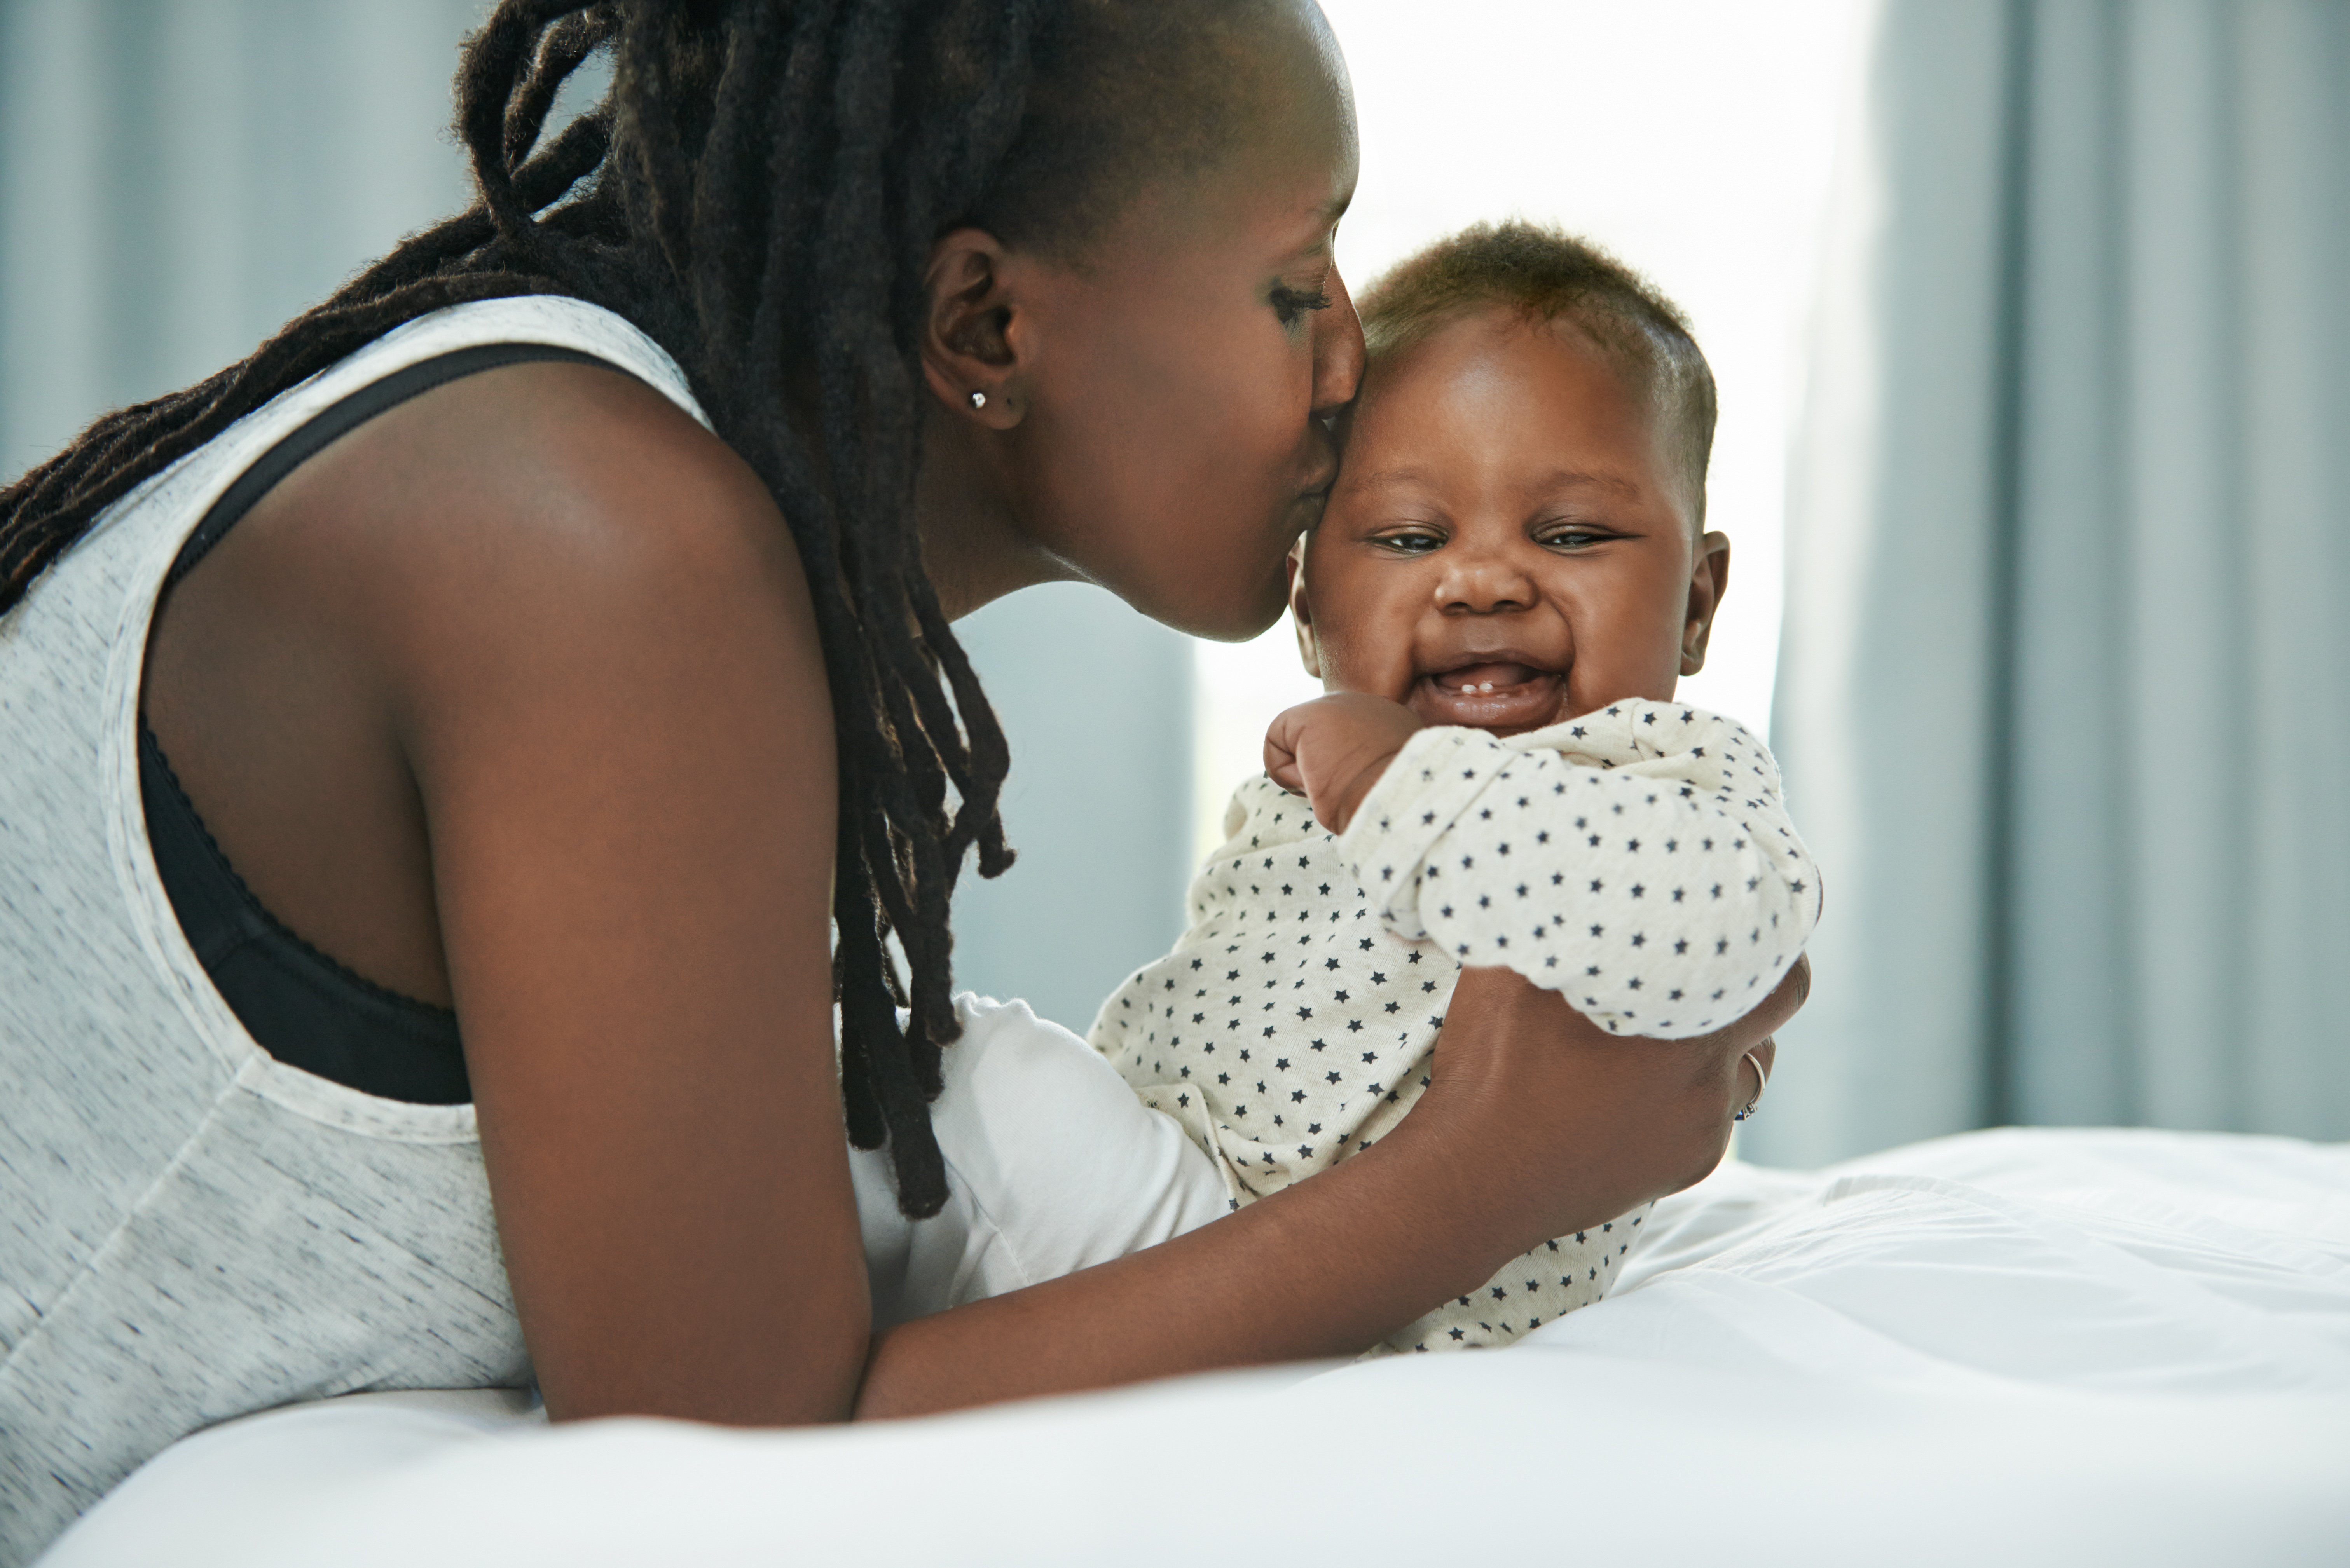 How to Add Newborn to Health Insurance